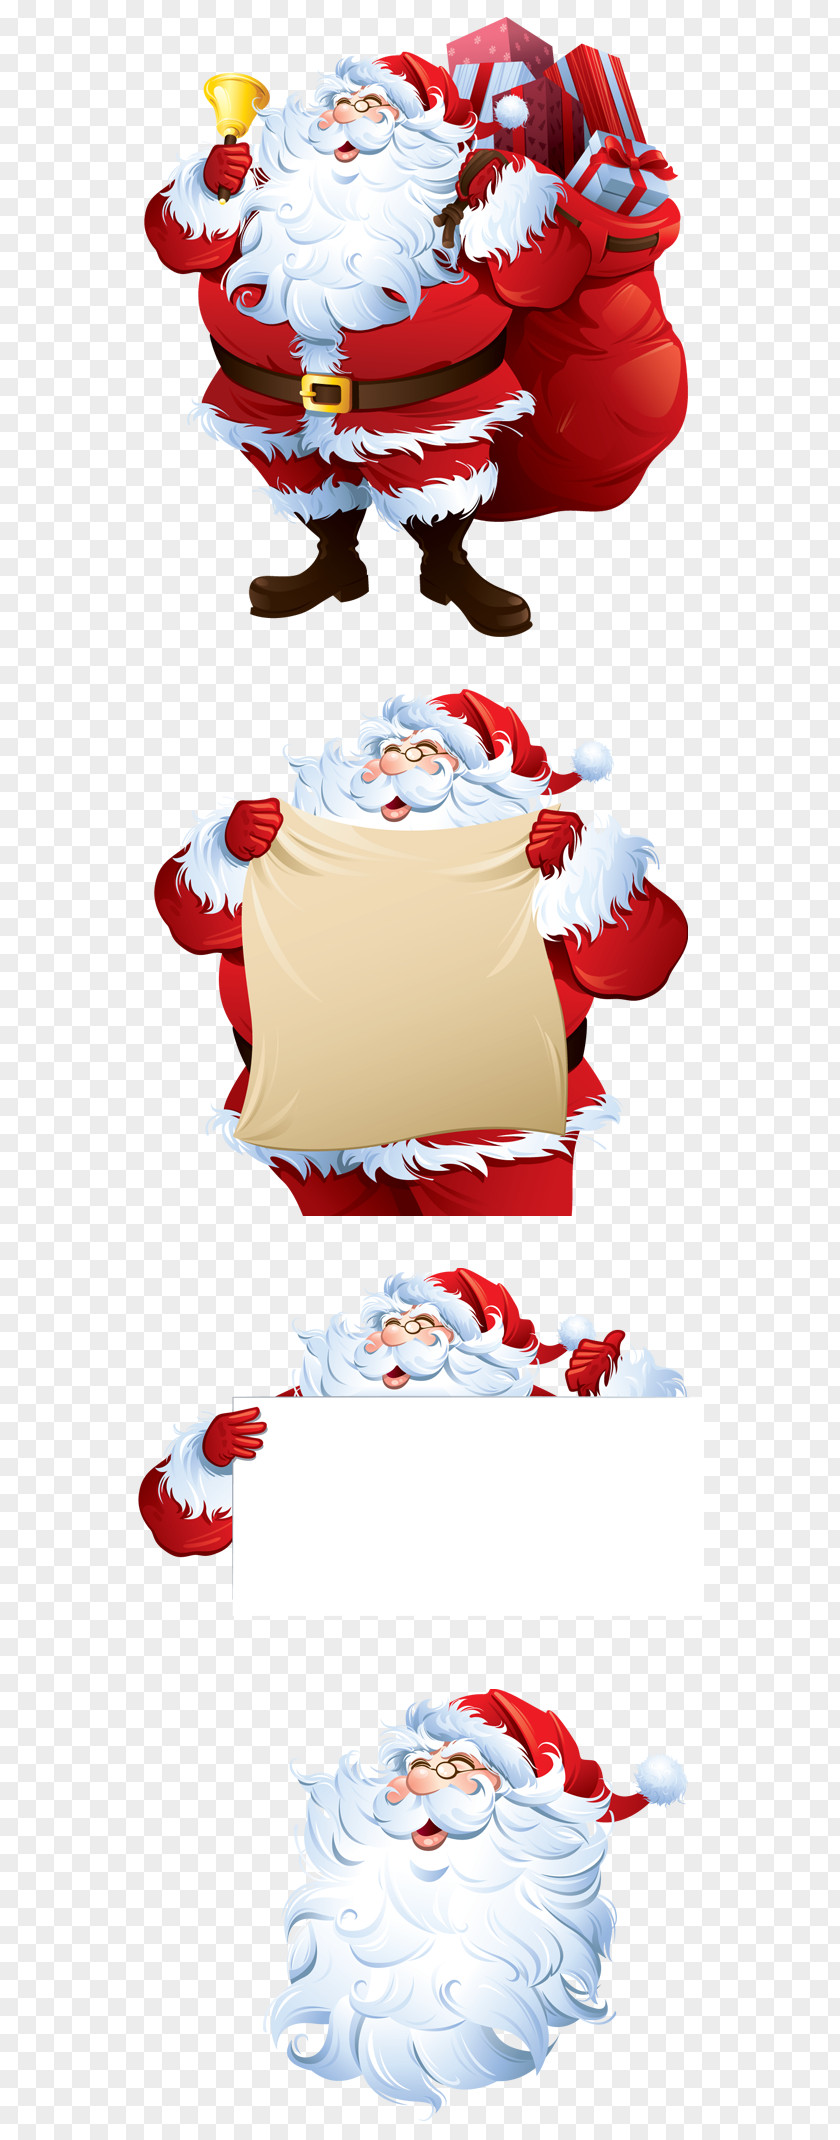 Claus Santa Vector Graphics Christmas Day Image PNG